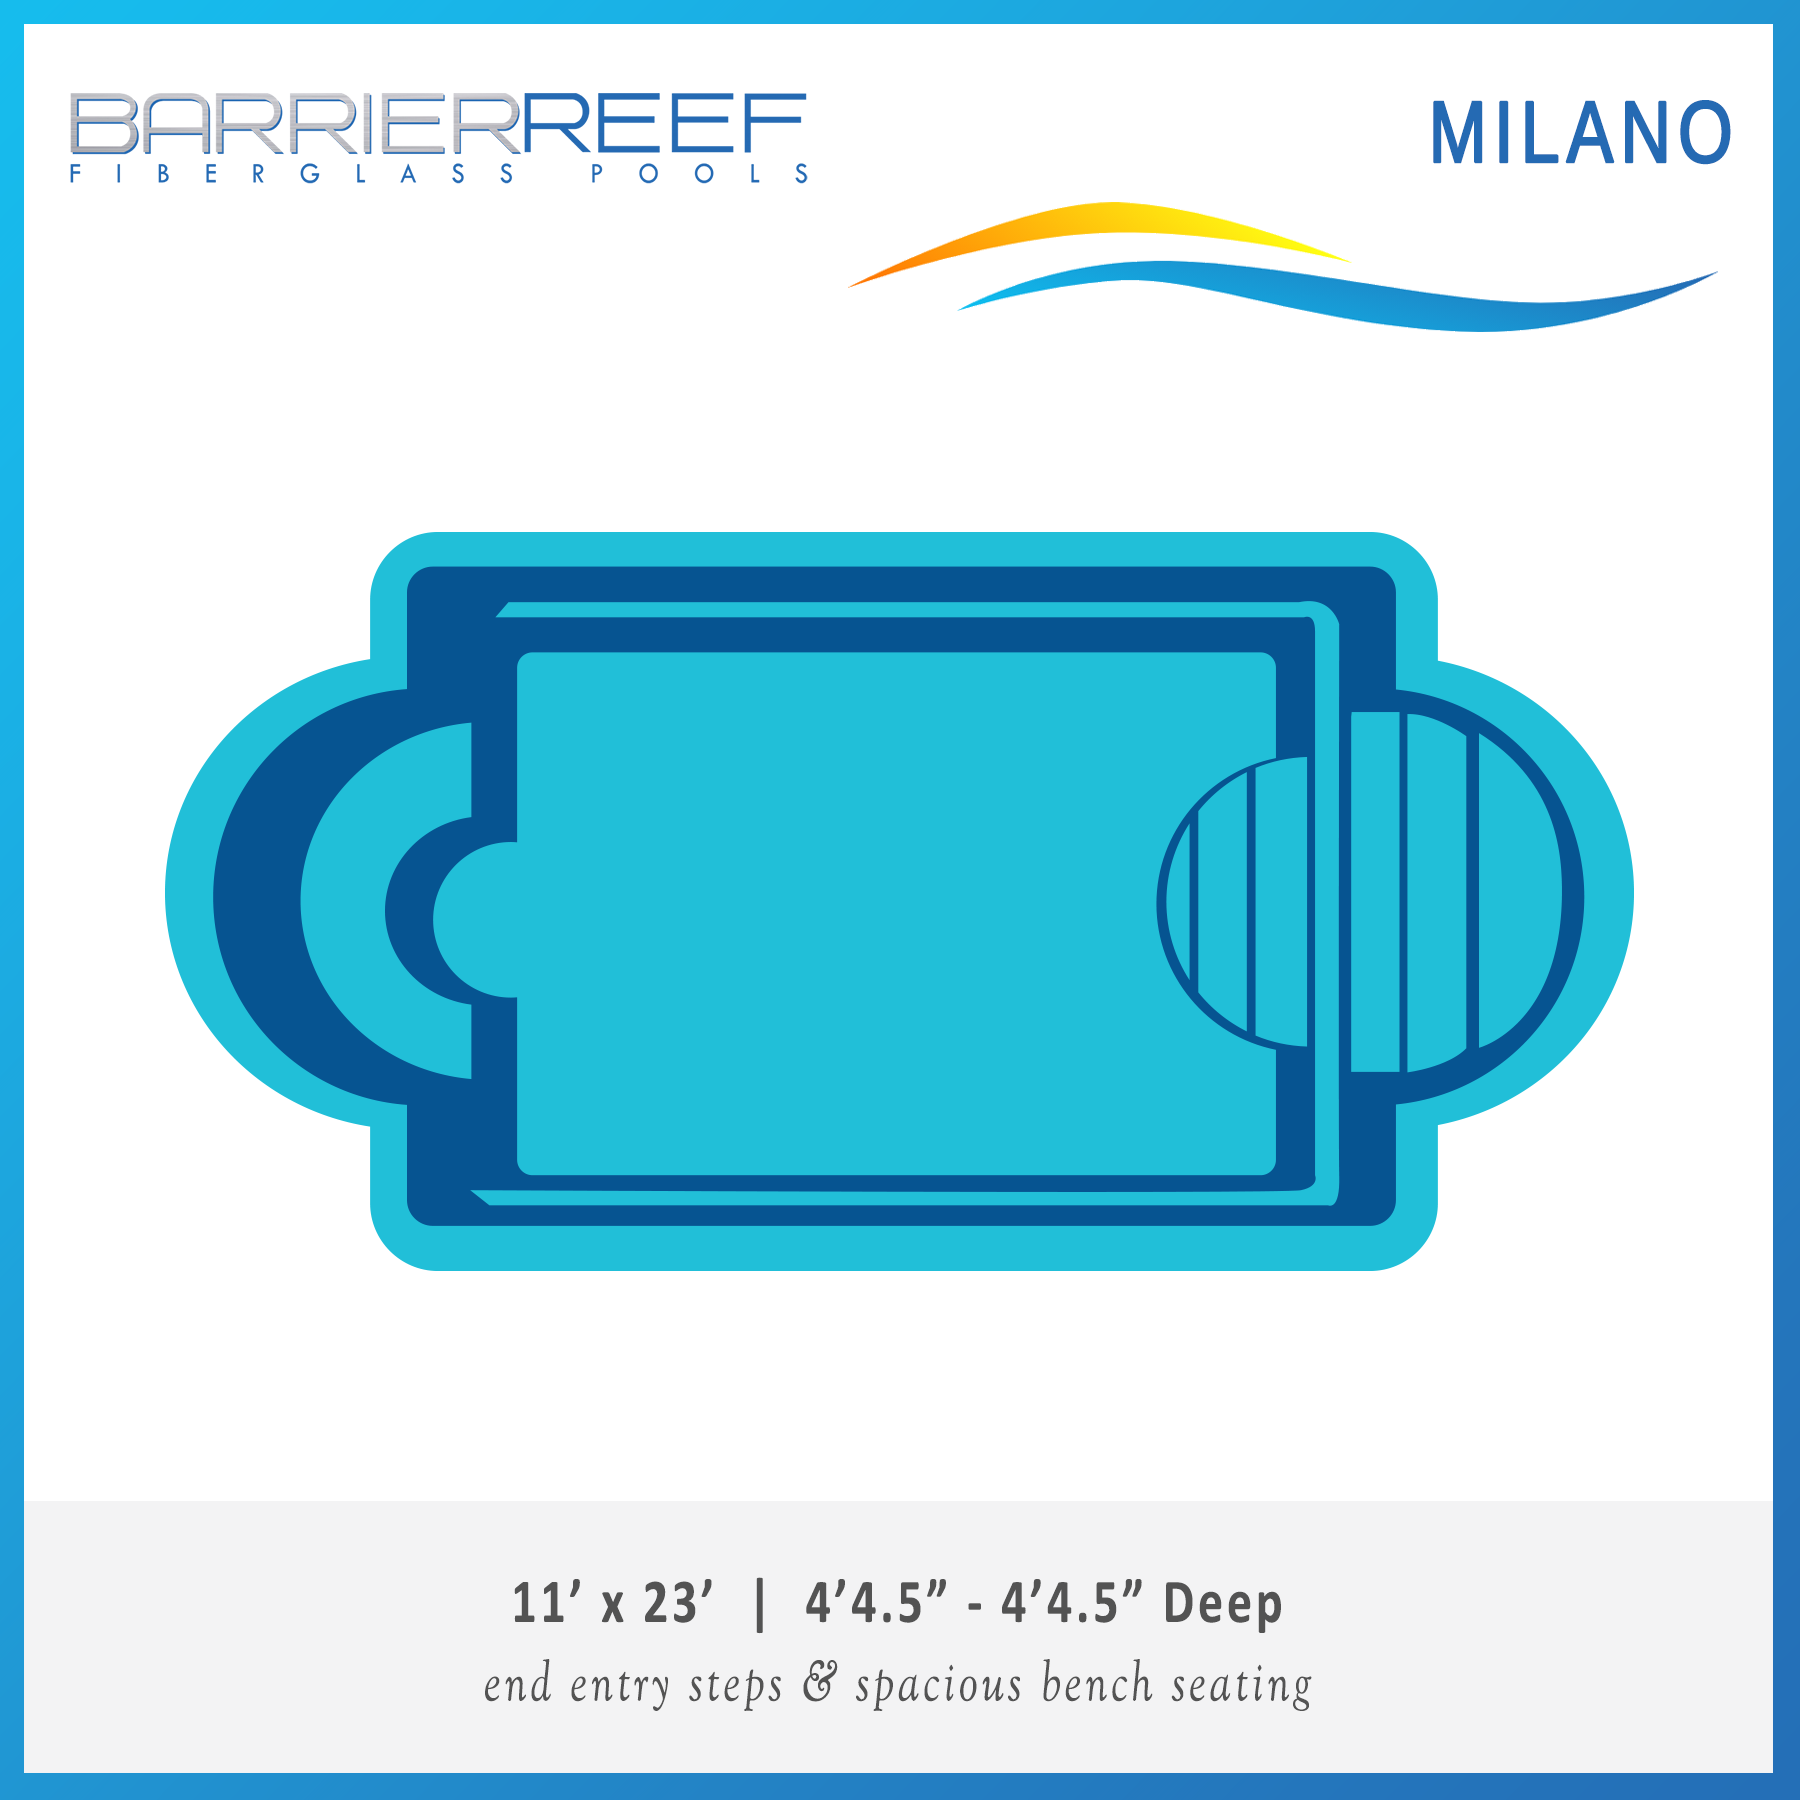 Milano Barrier Reef Fiberglass Pool